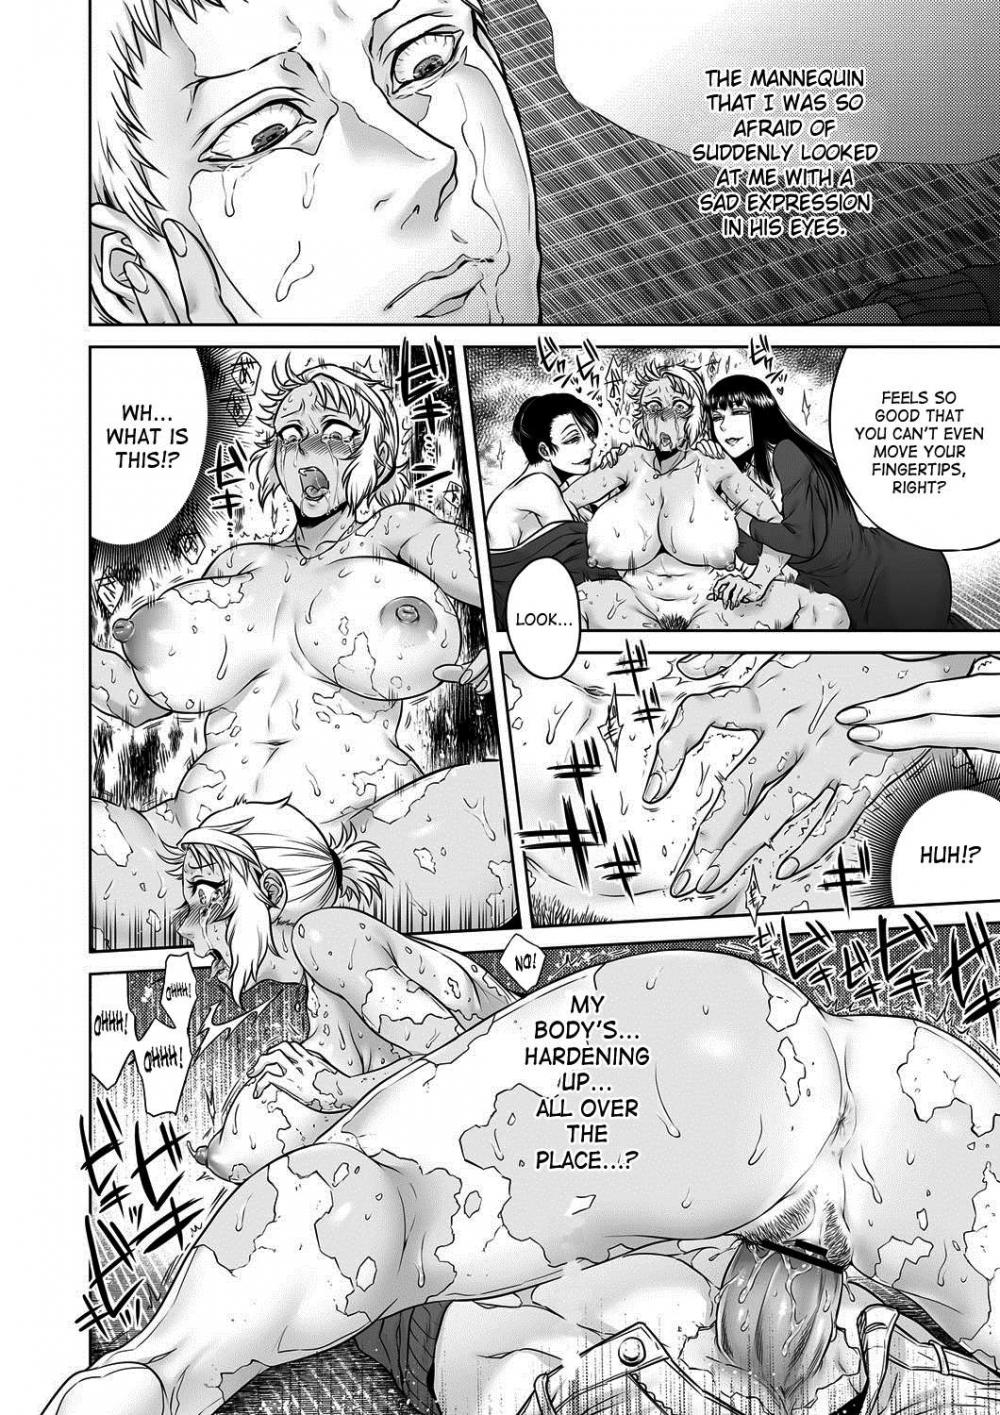 Hentai Manga Comic-Wonderfully Grotesque Mystery - Mannequin-Read-20